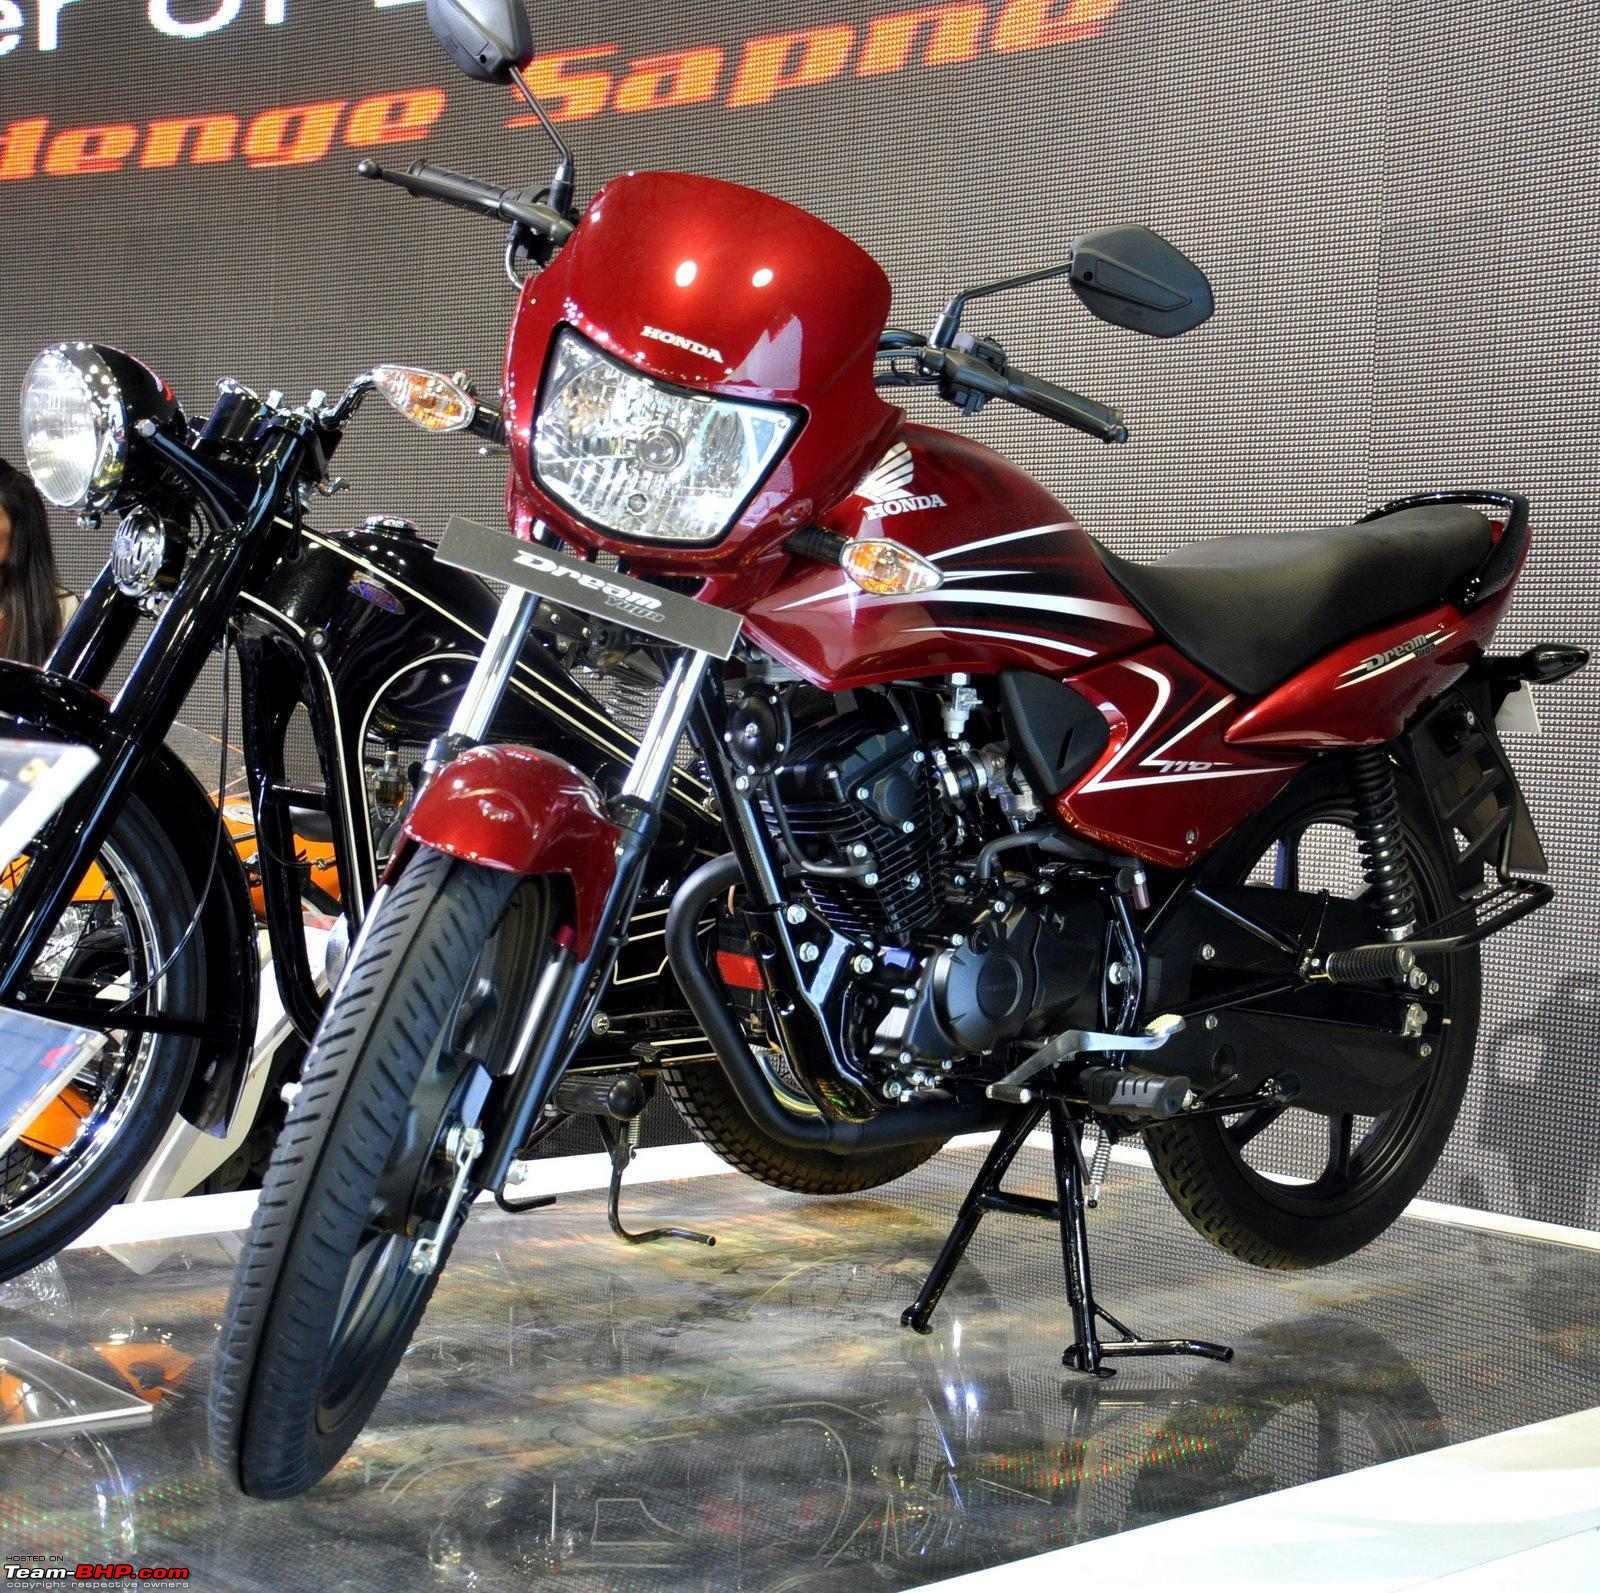 Honda to launch 100cc competitor to the Splendor - Team-BHP